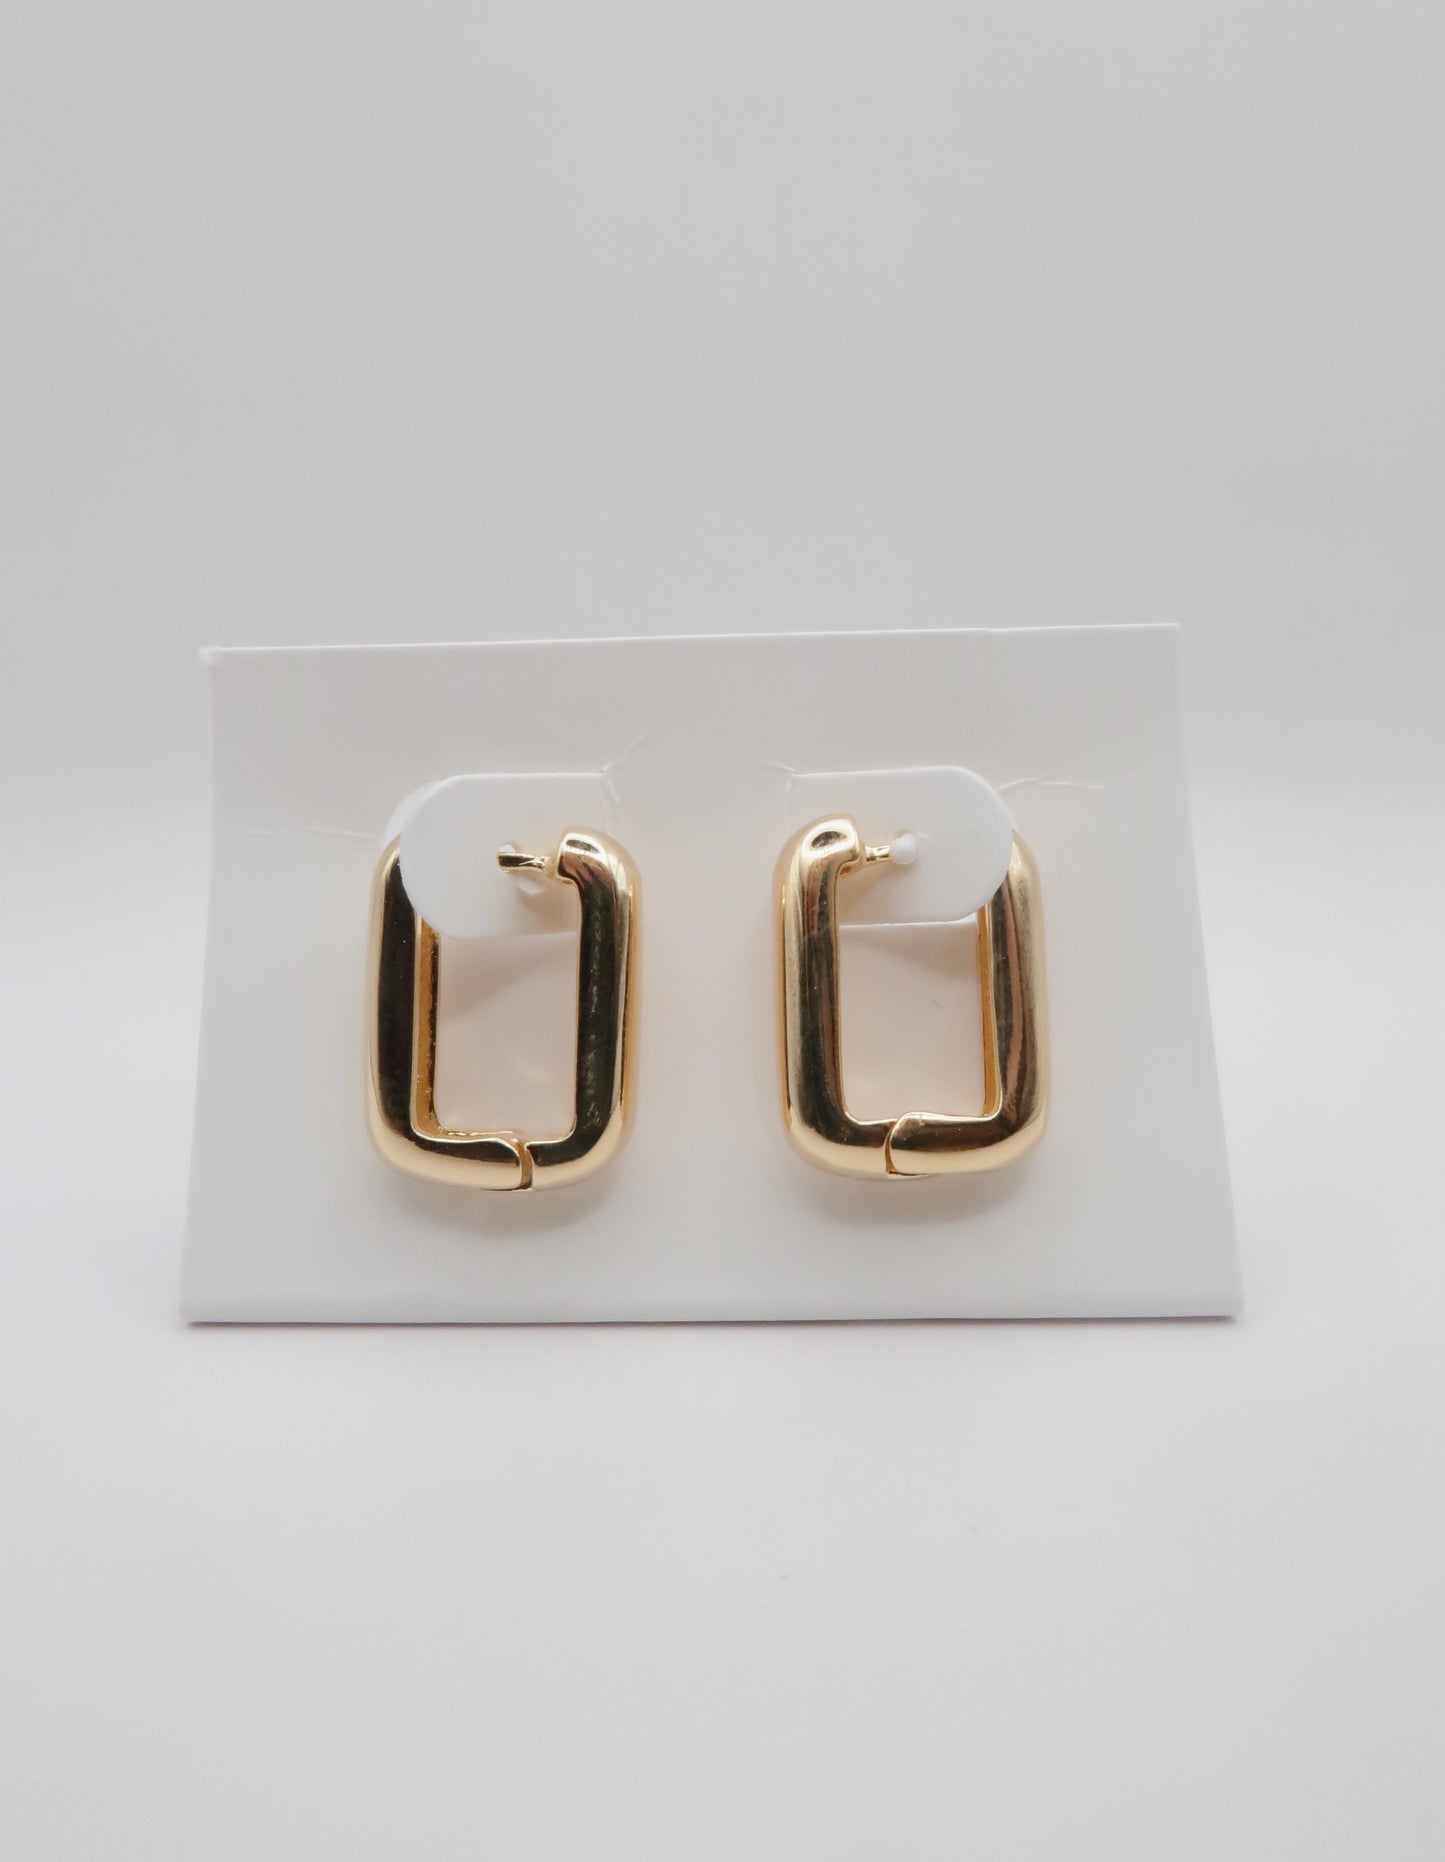 Earring Rectangular - Gold plated